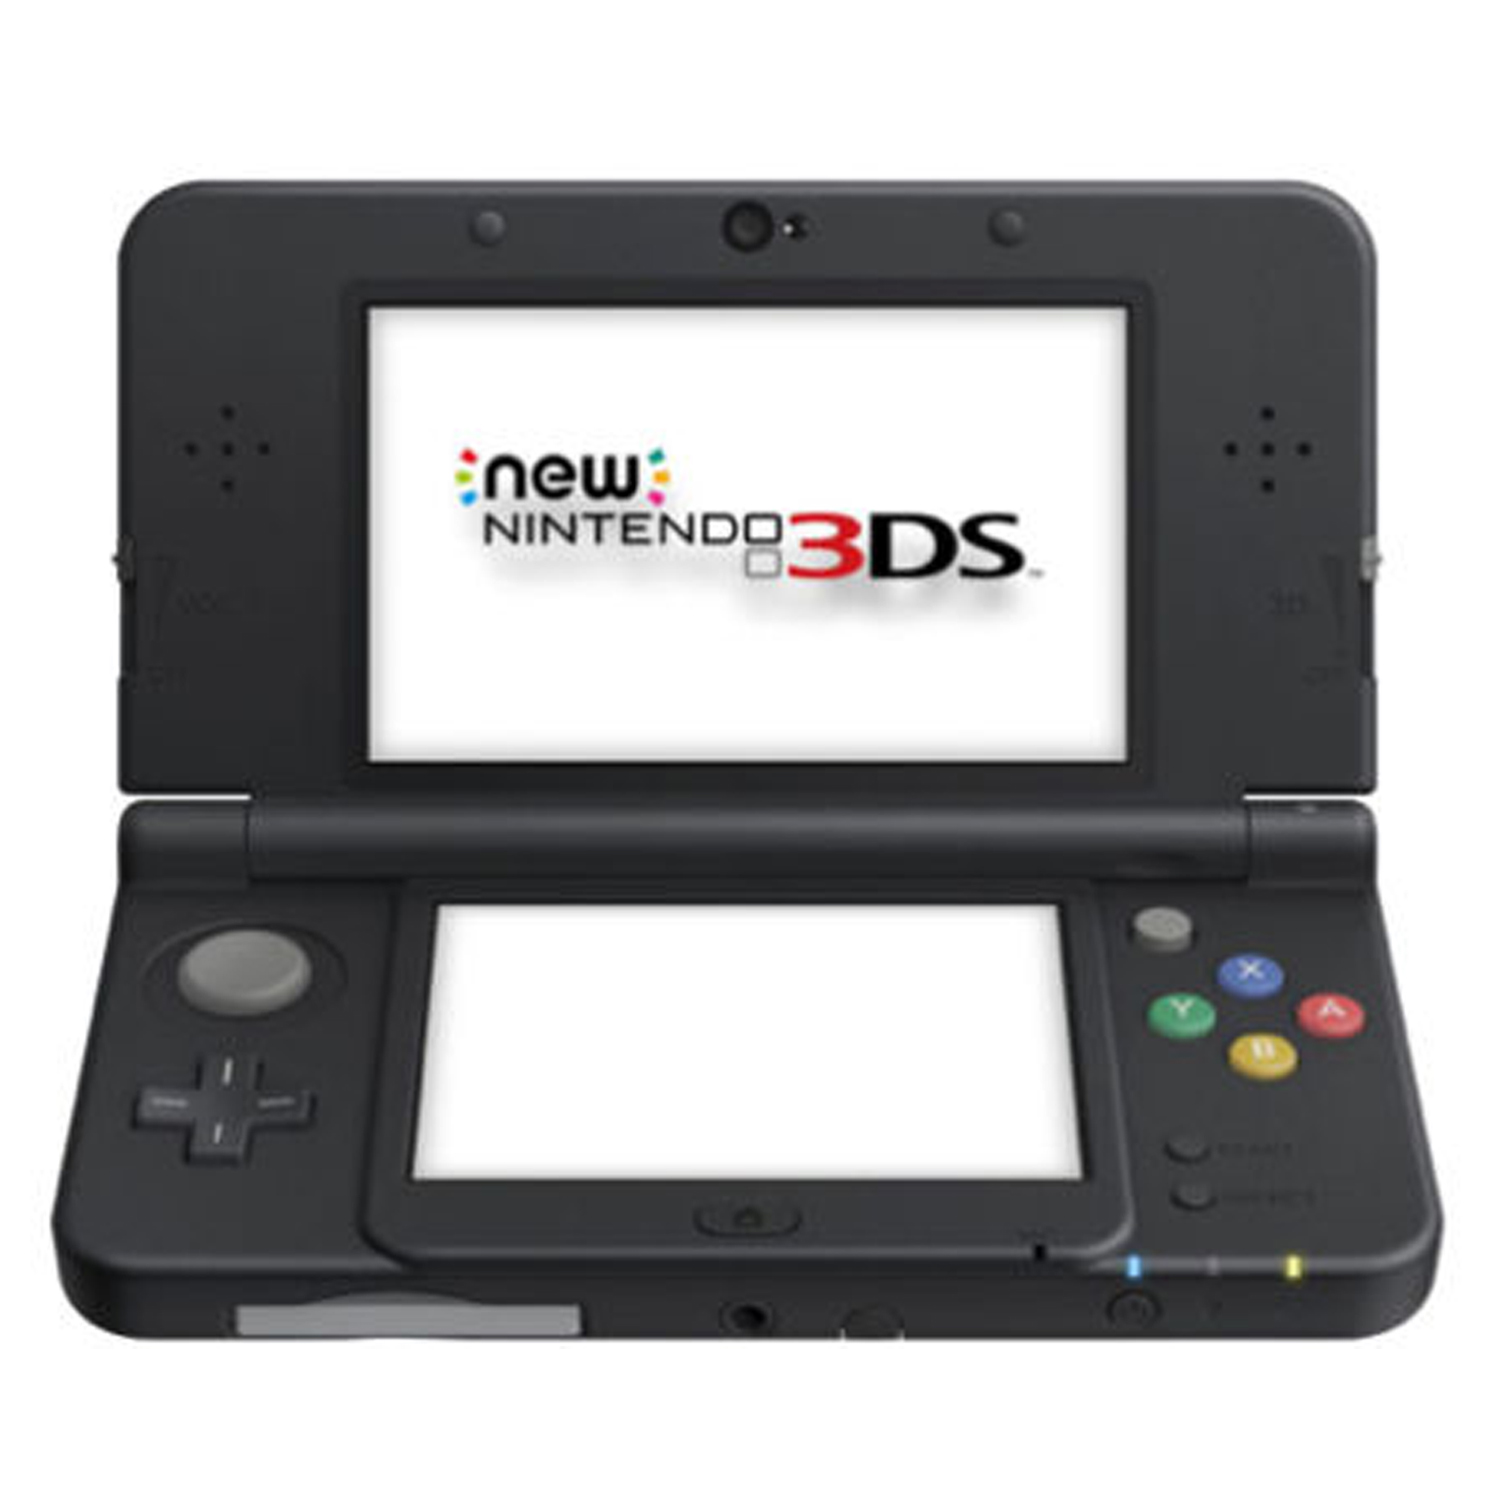 Ds message. Приставка Nintendo 3ds. Нинтендо ДС. Nintendo DS, 3ds, 3ds DS. New Nintendo 3ds.